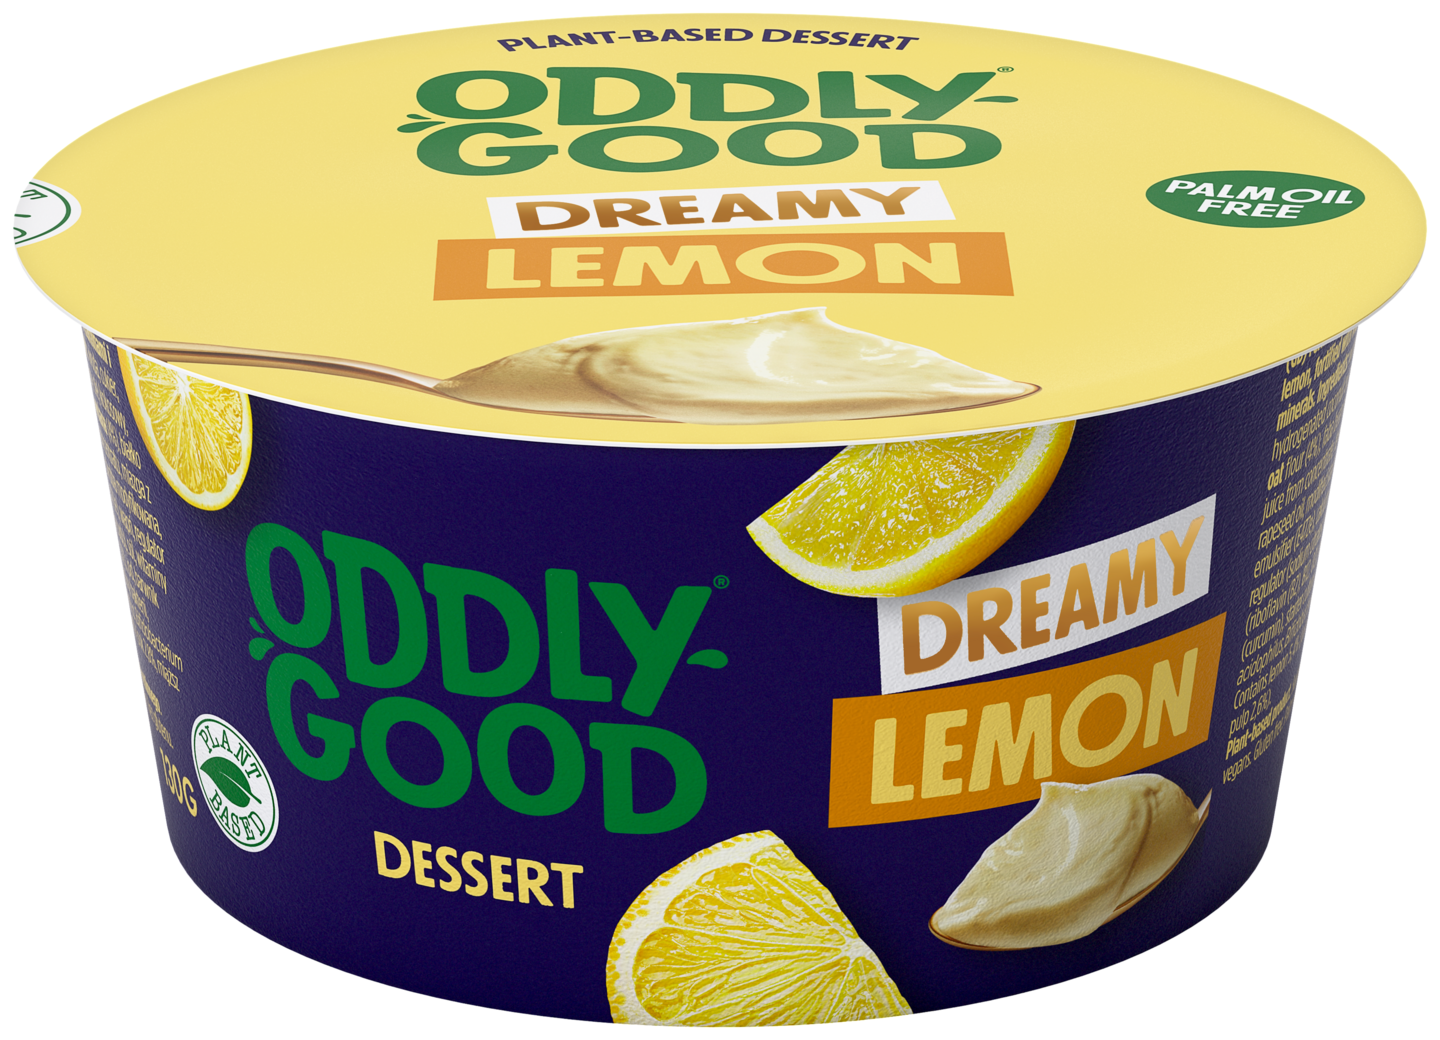 Oddlygood Dessert 130g dreamy lemon